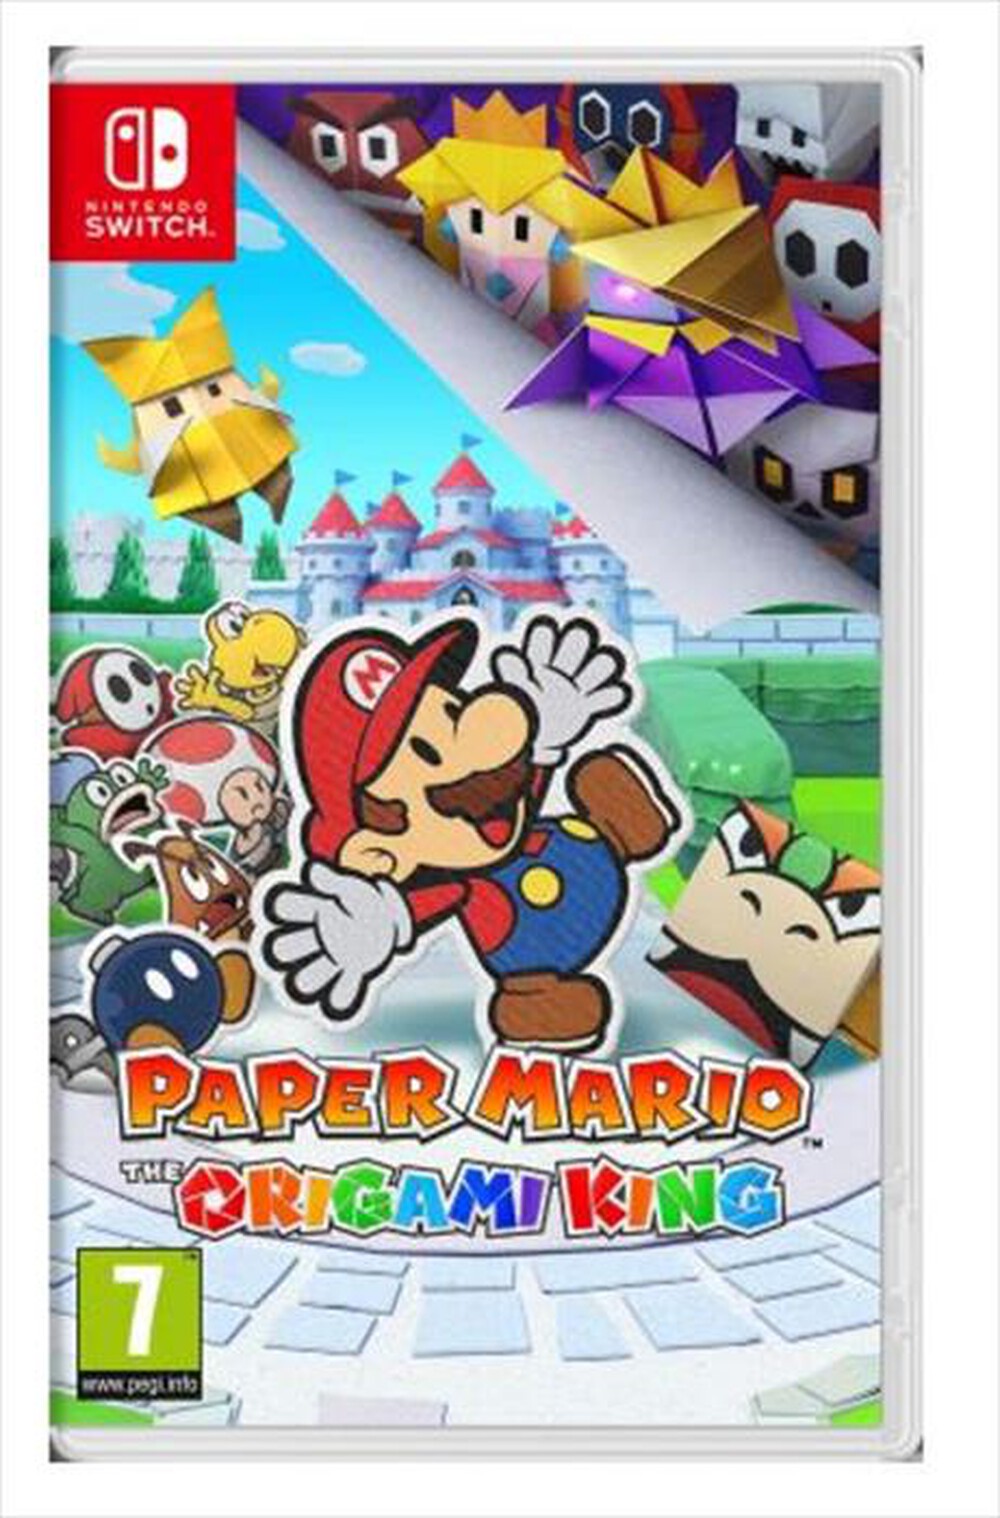 "NINTENDO - Paper Mario: The Origami King"